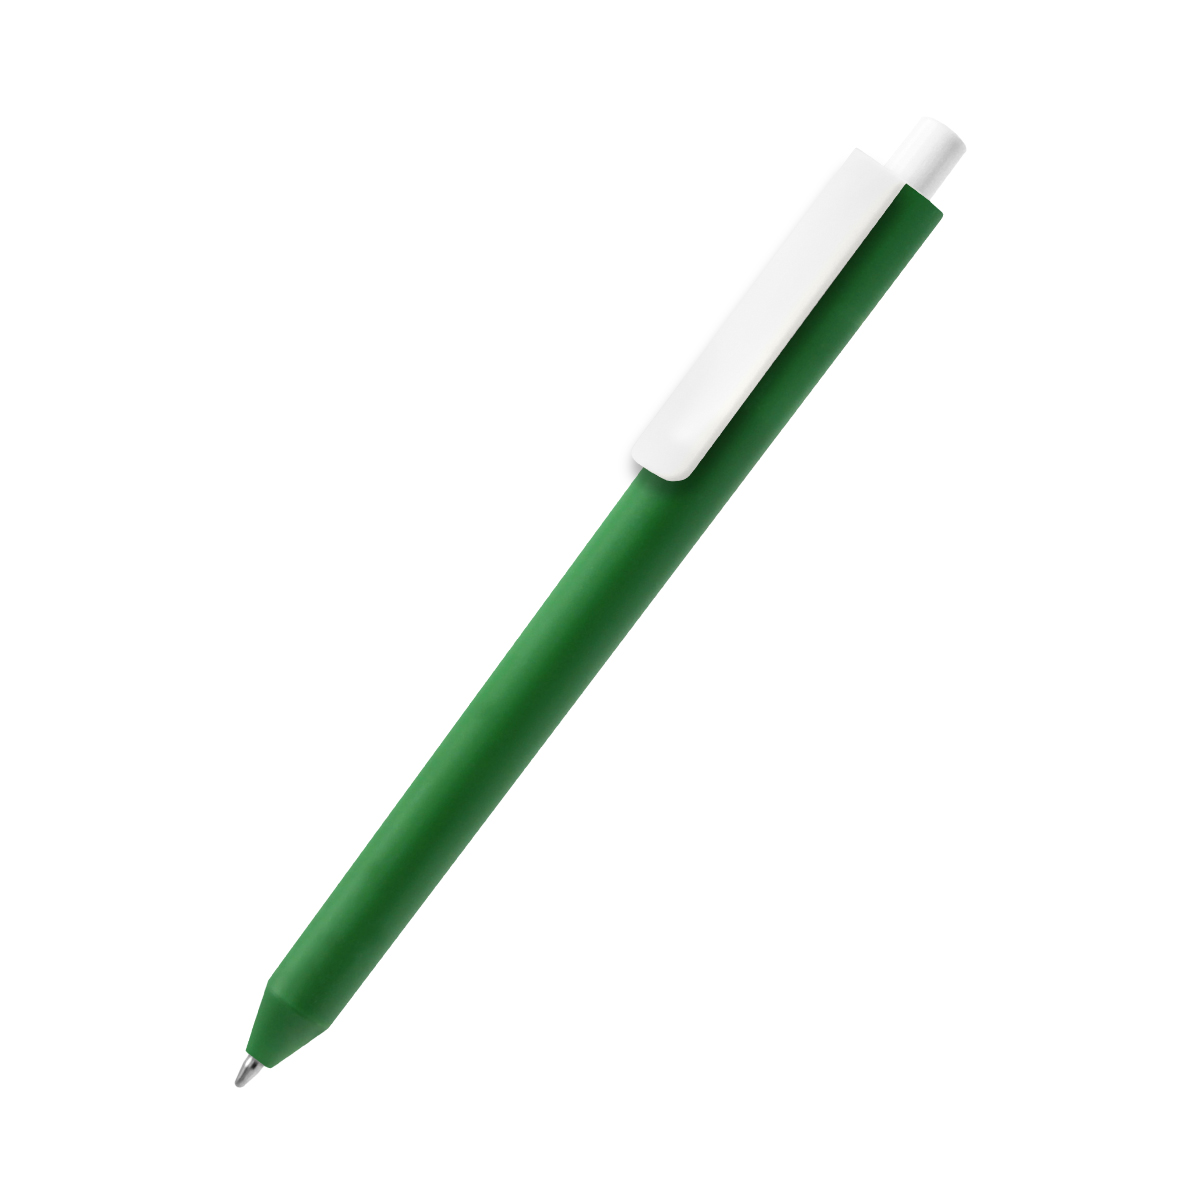 Ручка пластиковая Koln, желтая